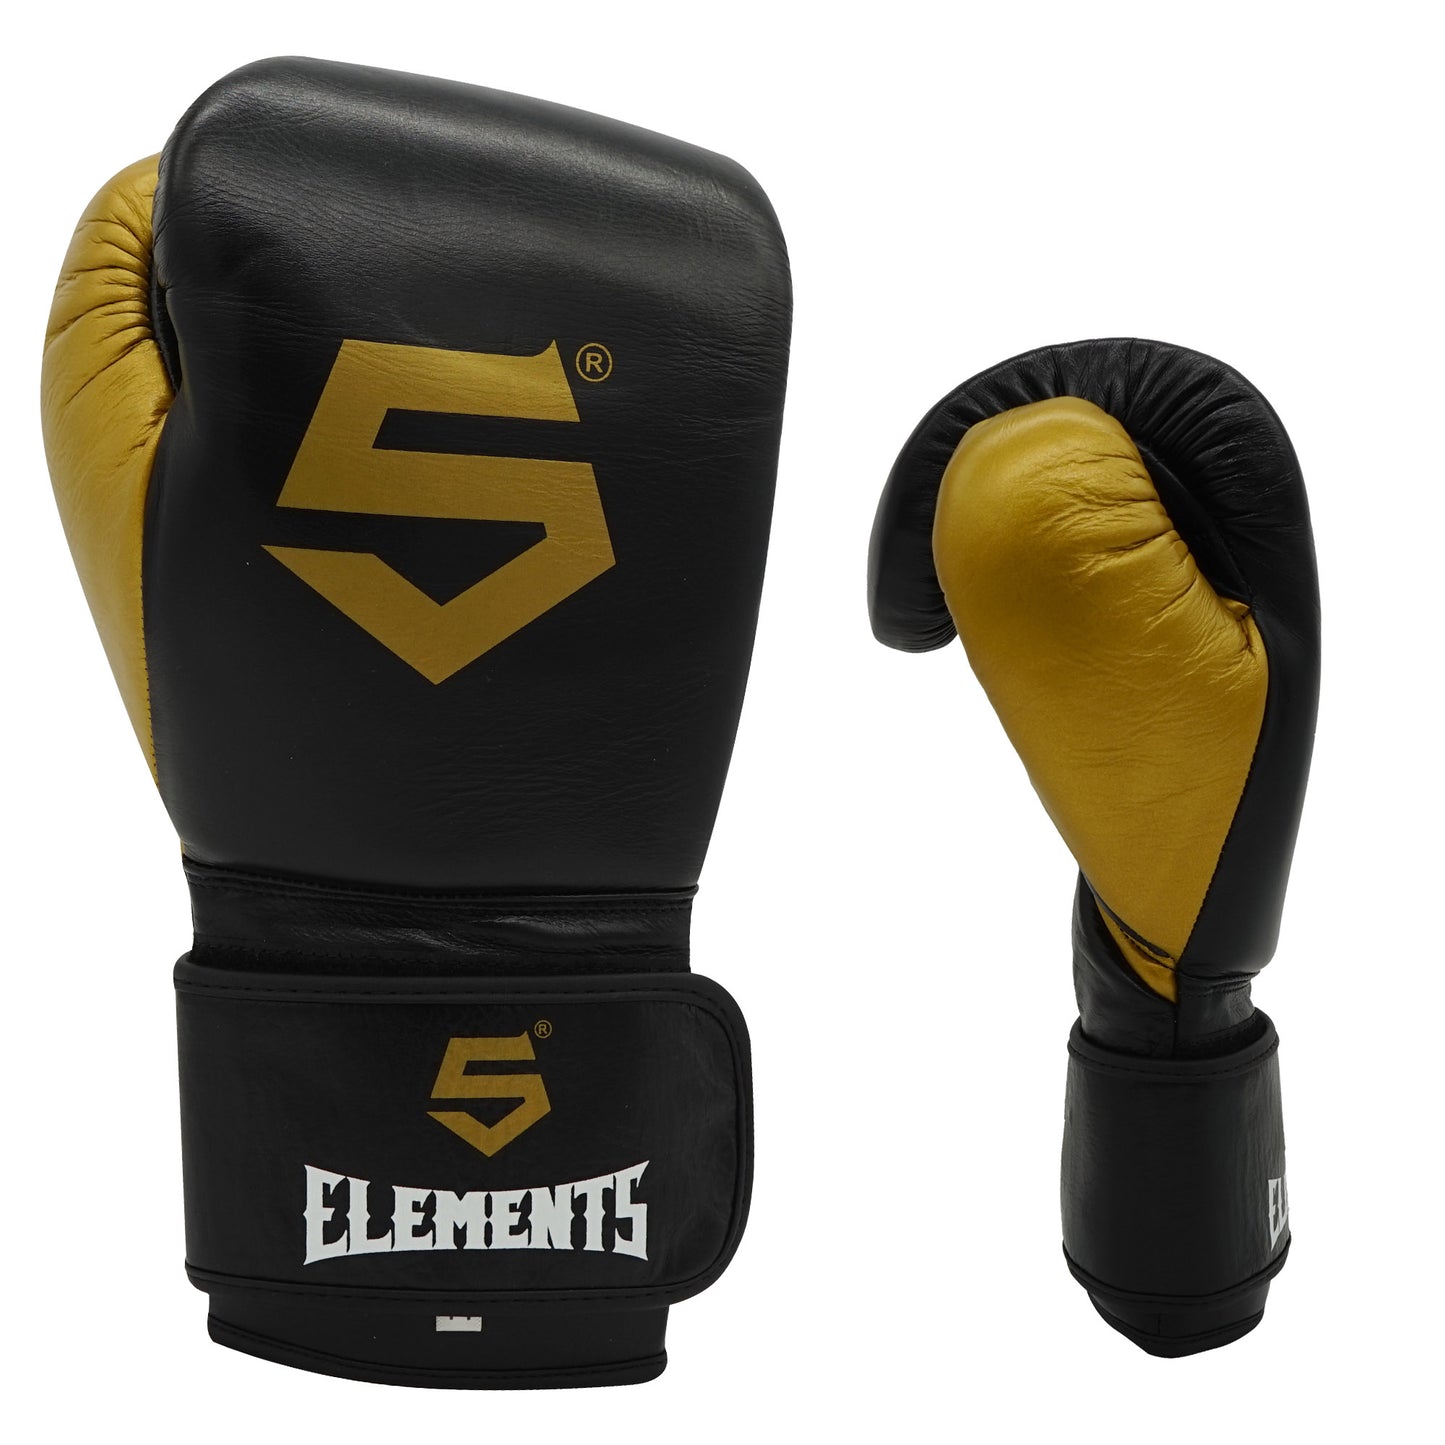 5 Elements Elite Boxhandschuh-Schwarz/Gold